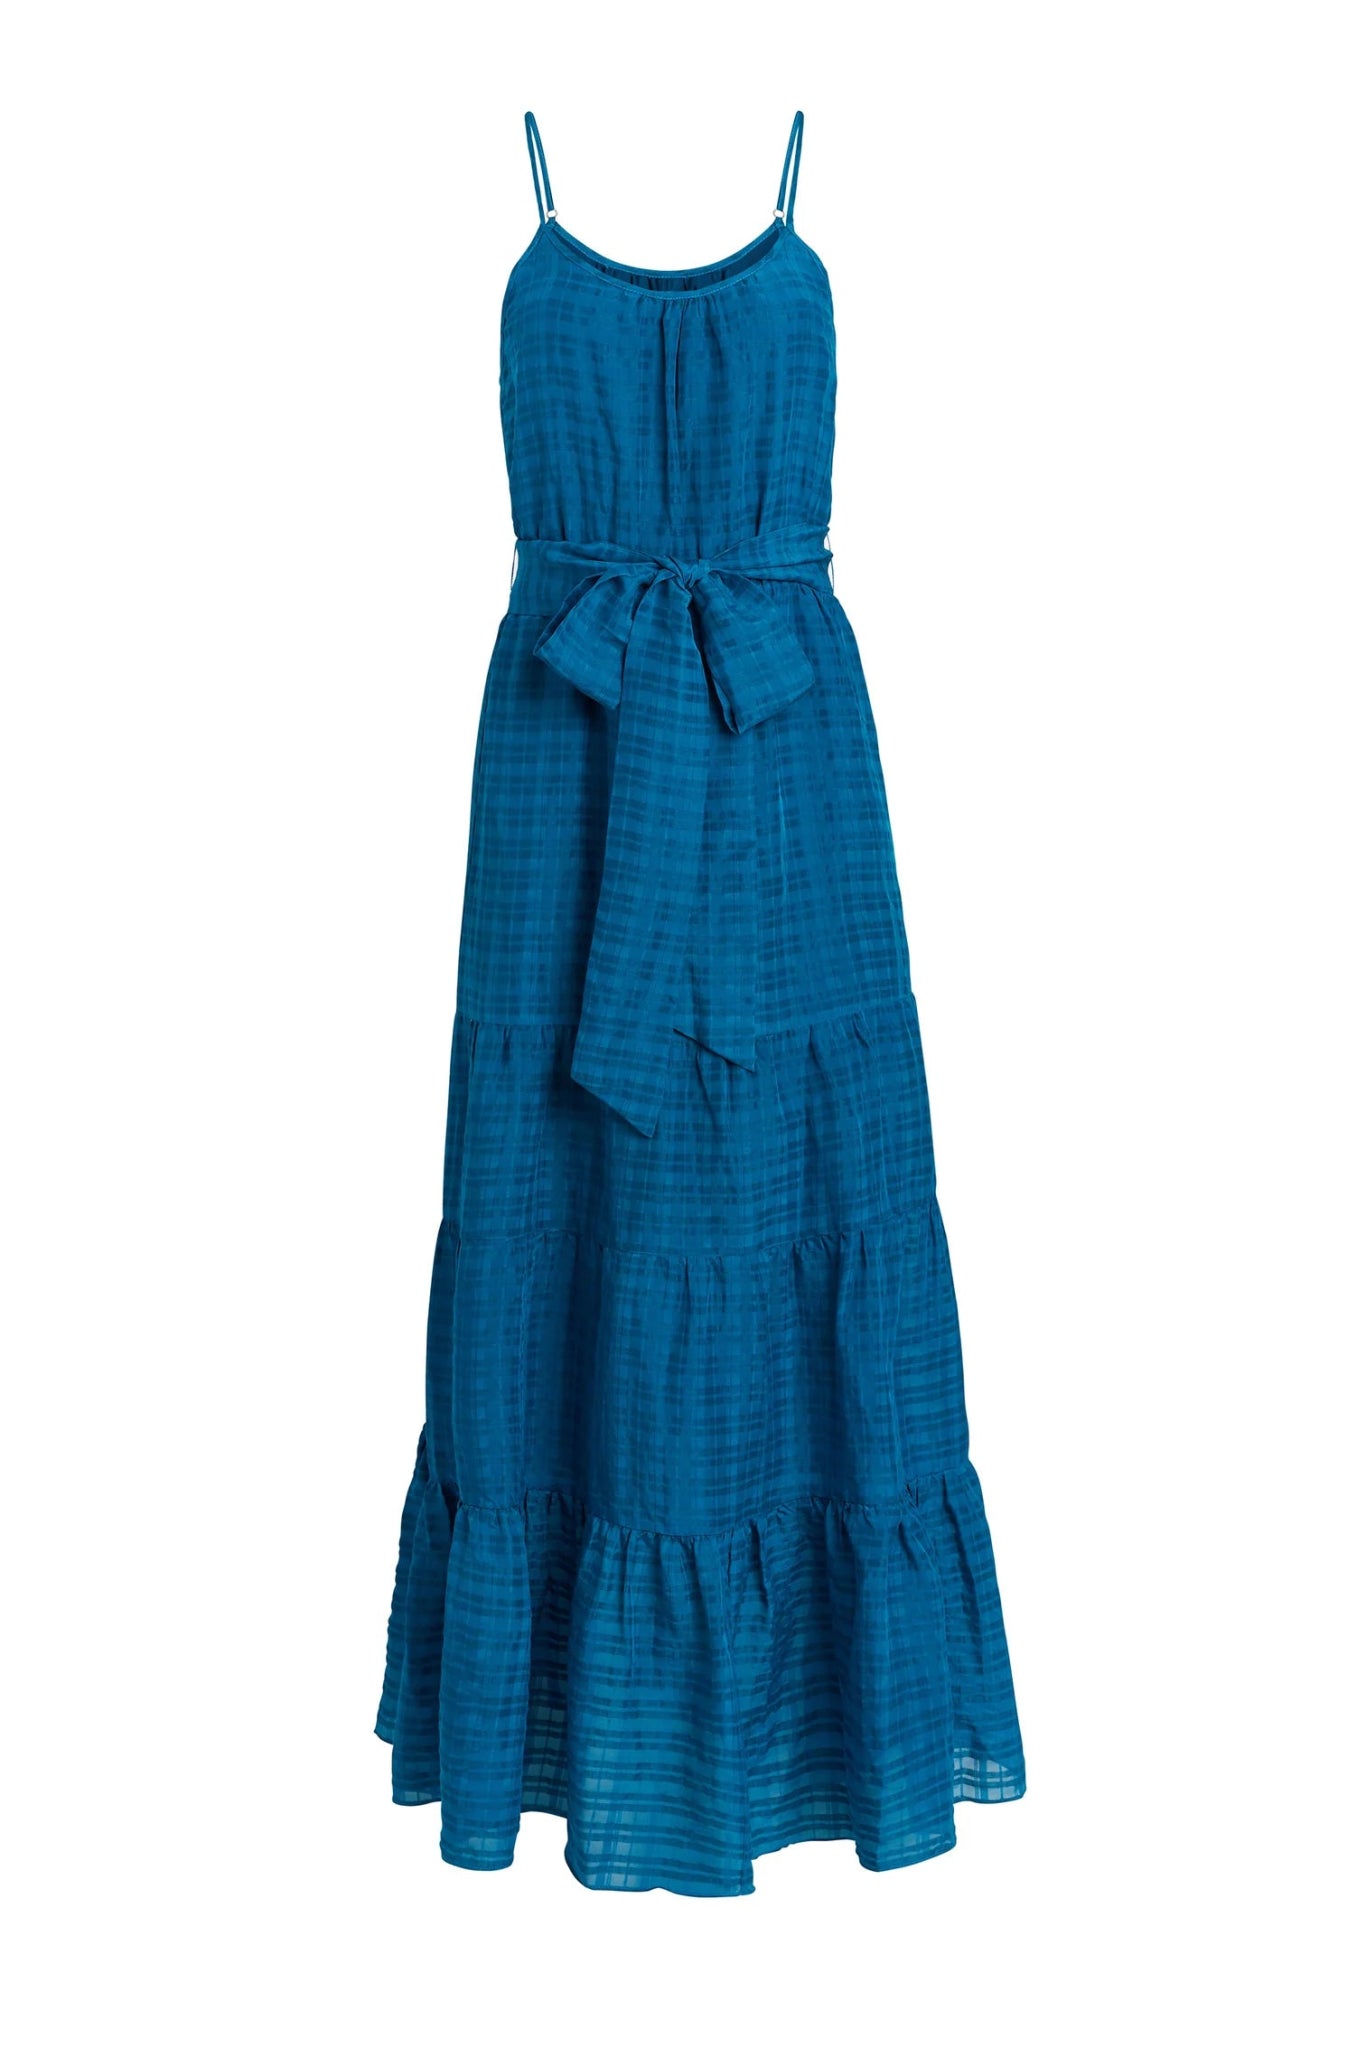 Marie Oliver Kinley Dress in Lagoon - Estilo Boutique